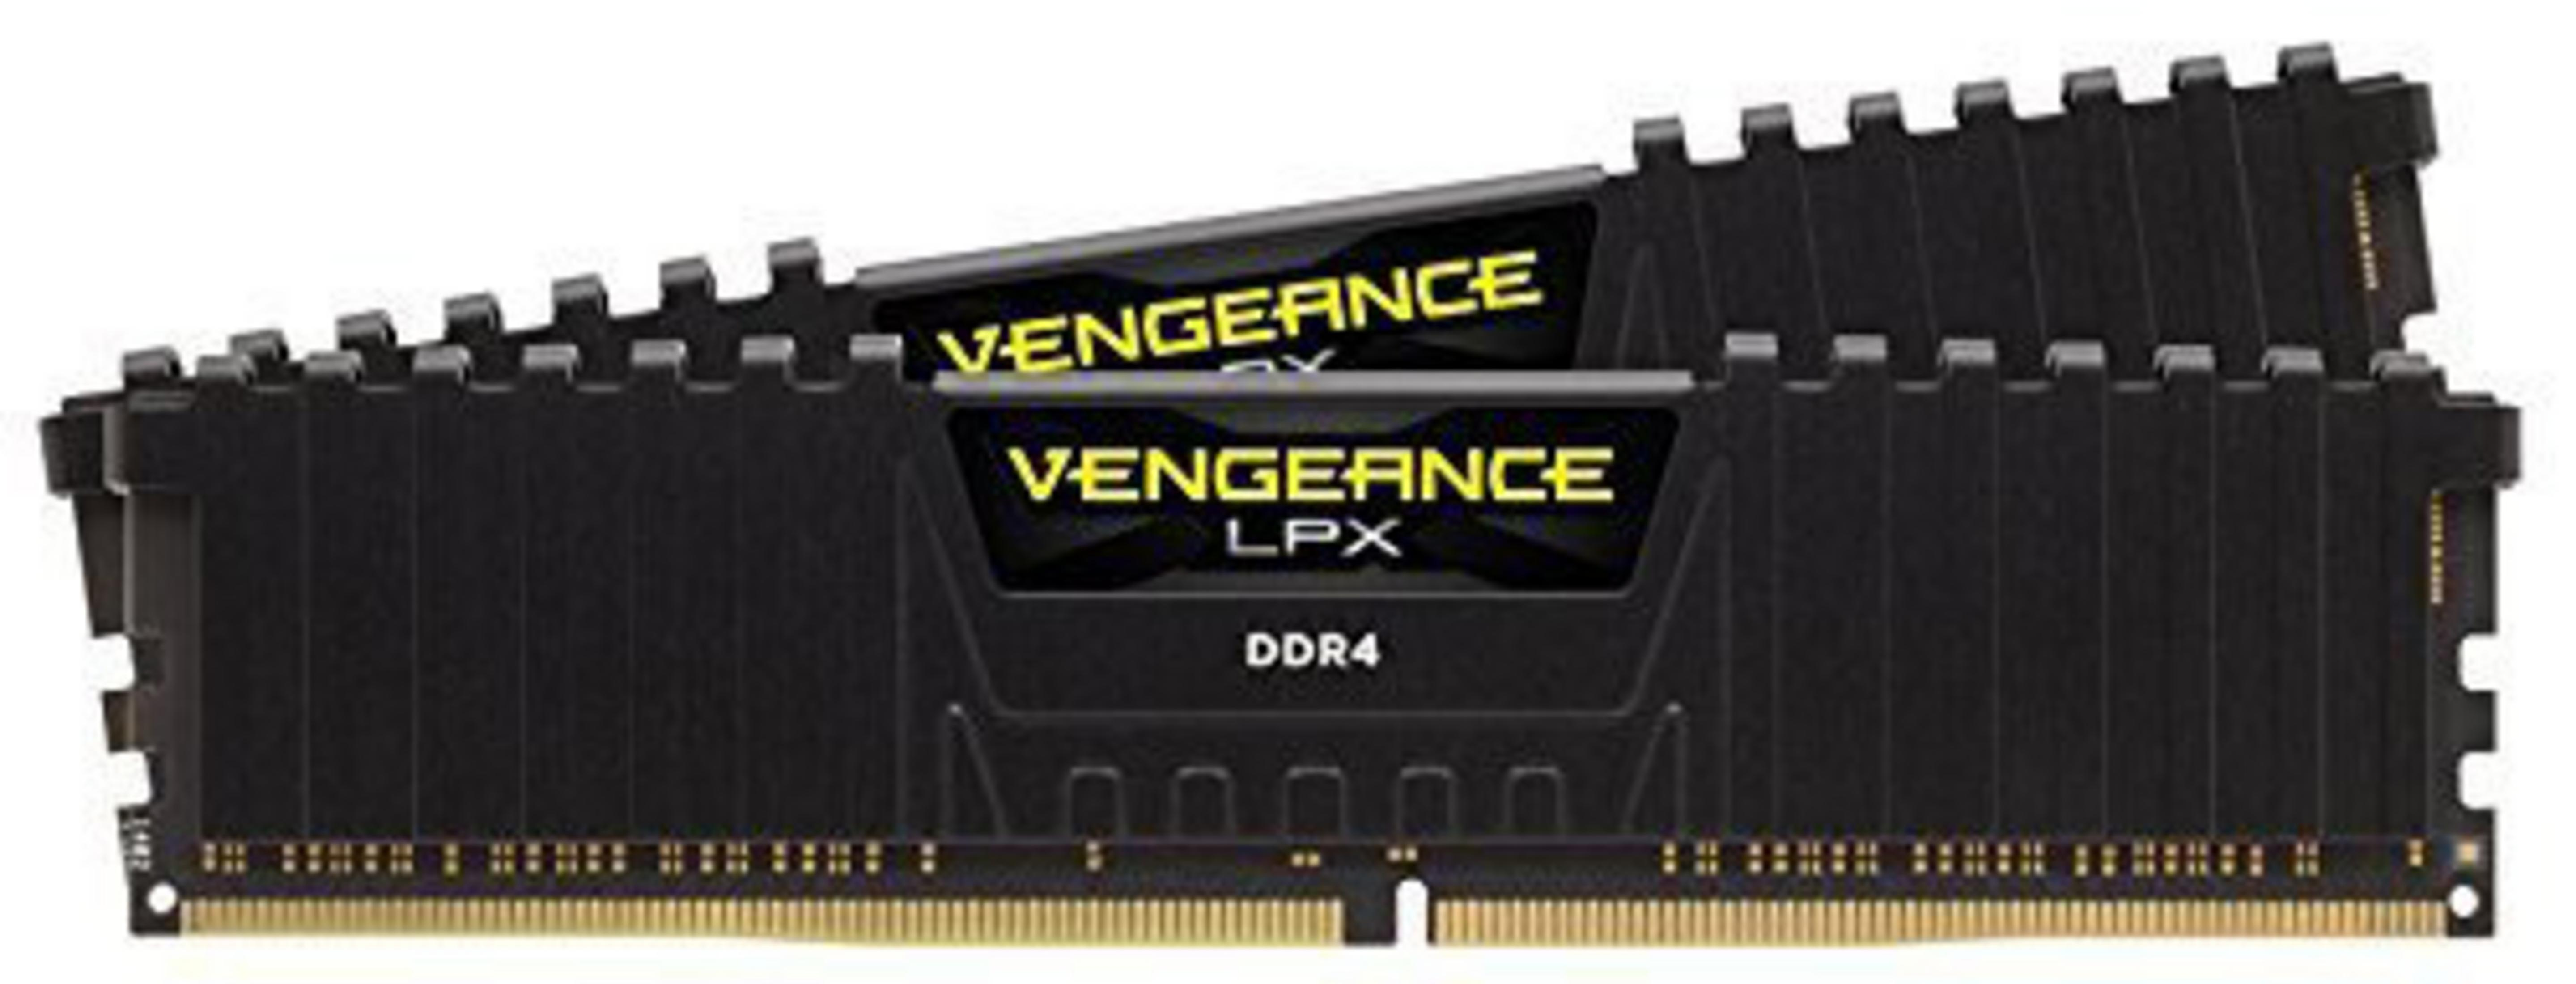 VENGEANCE CORSAIR Arbeitsspeicher CMK16GX4M2A2133C13 GB 2133MHZ LPX 16 16GB DDR4 DDR4